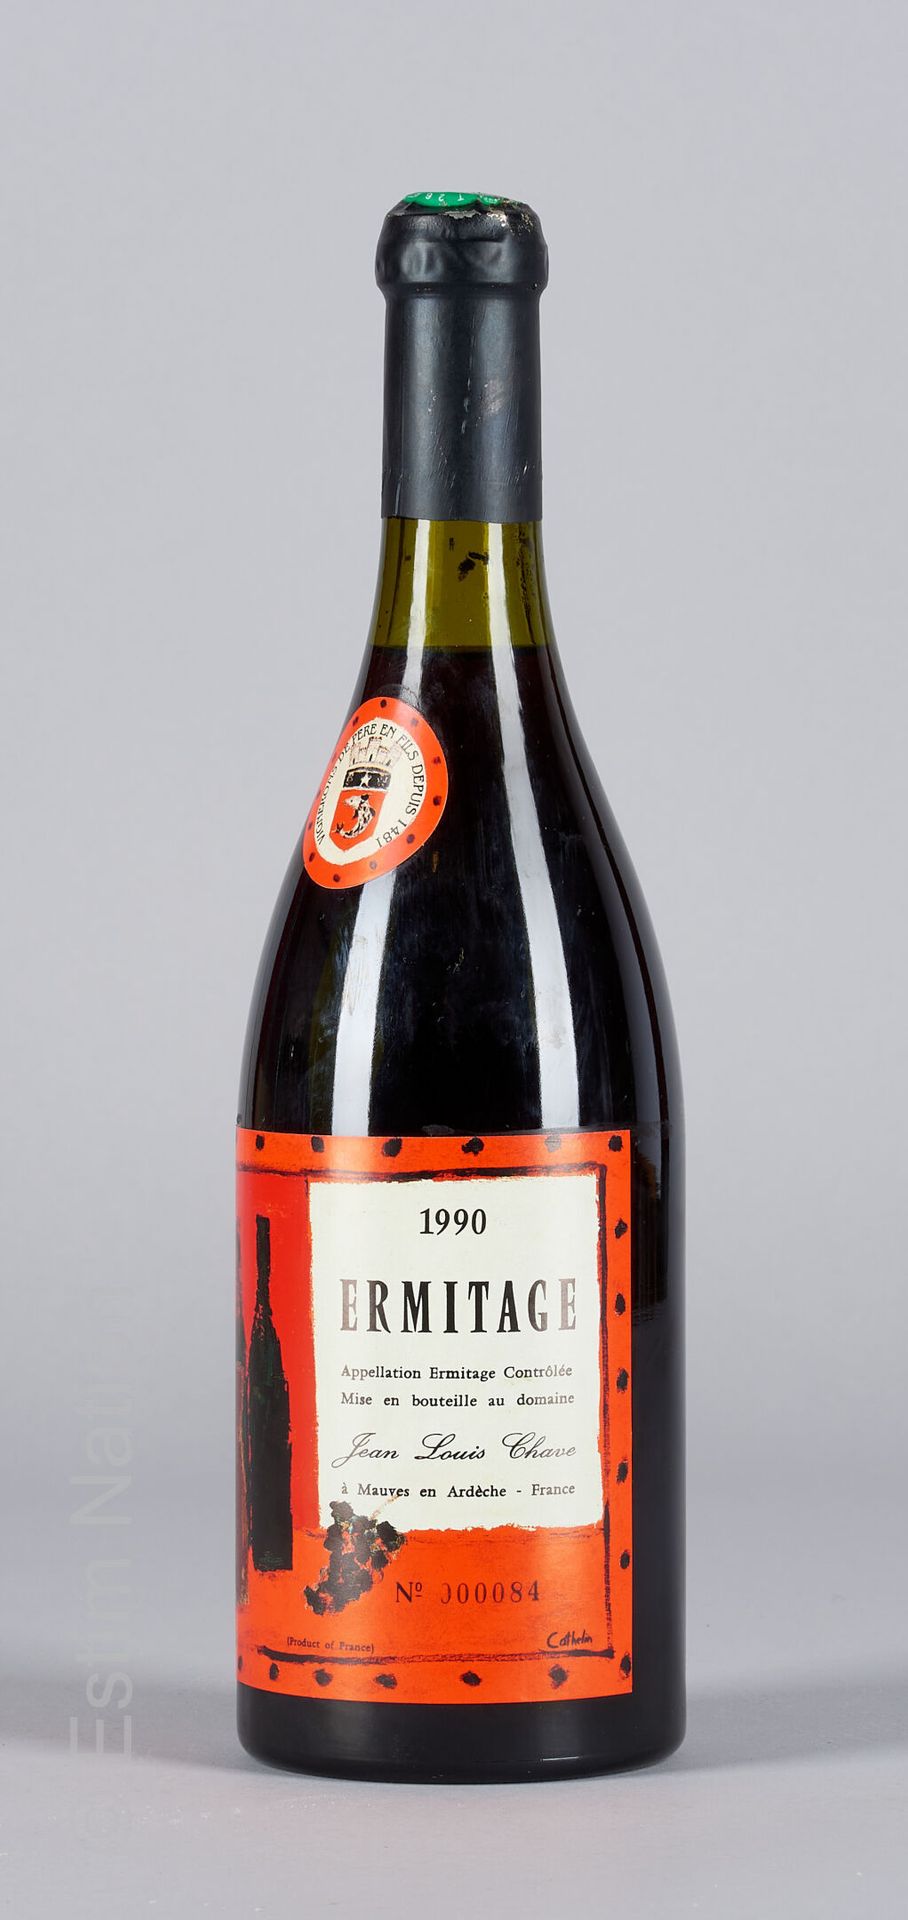 CUVEE CATHELIN 1瓶ERMITAGE 1990 Cuvée Cathelin Jean-Louis Chave

(N. 在2和2.5厘米之间)(&hellip;